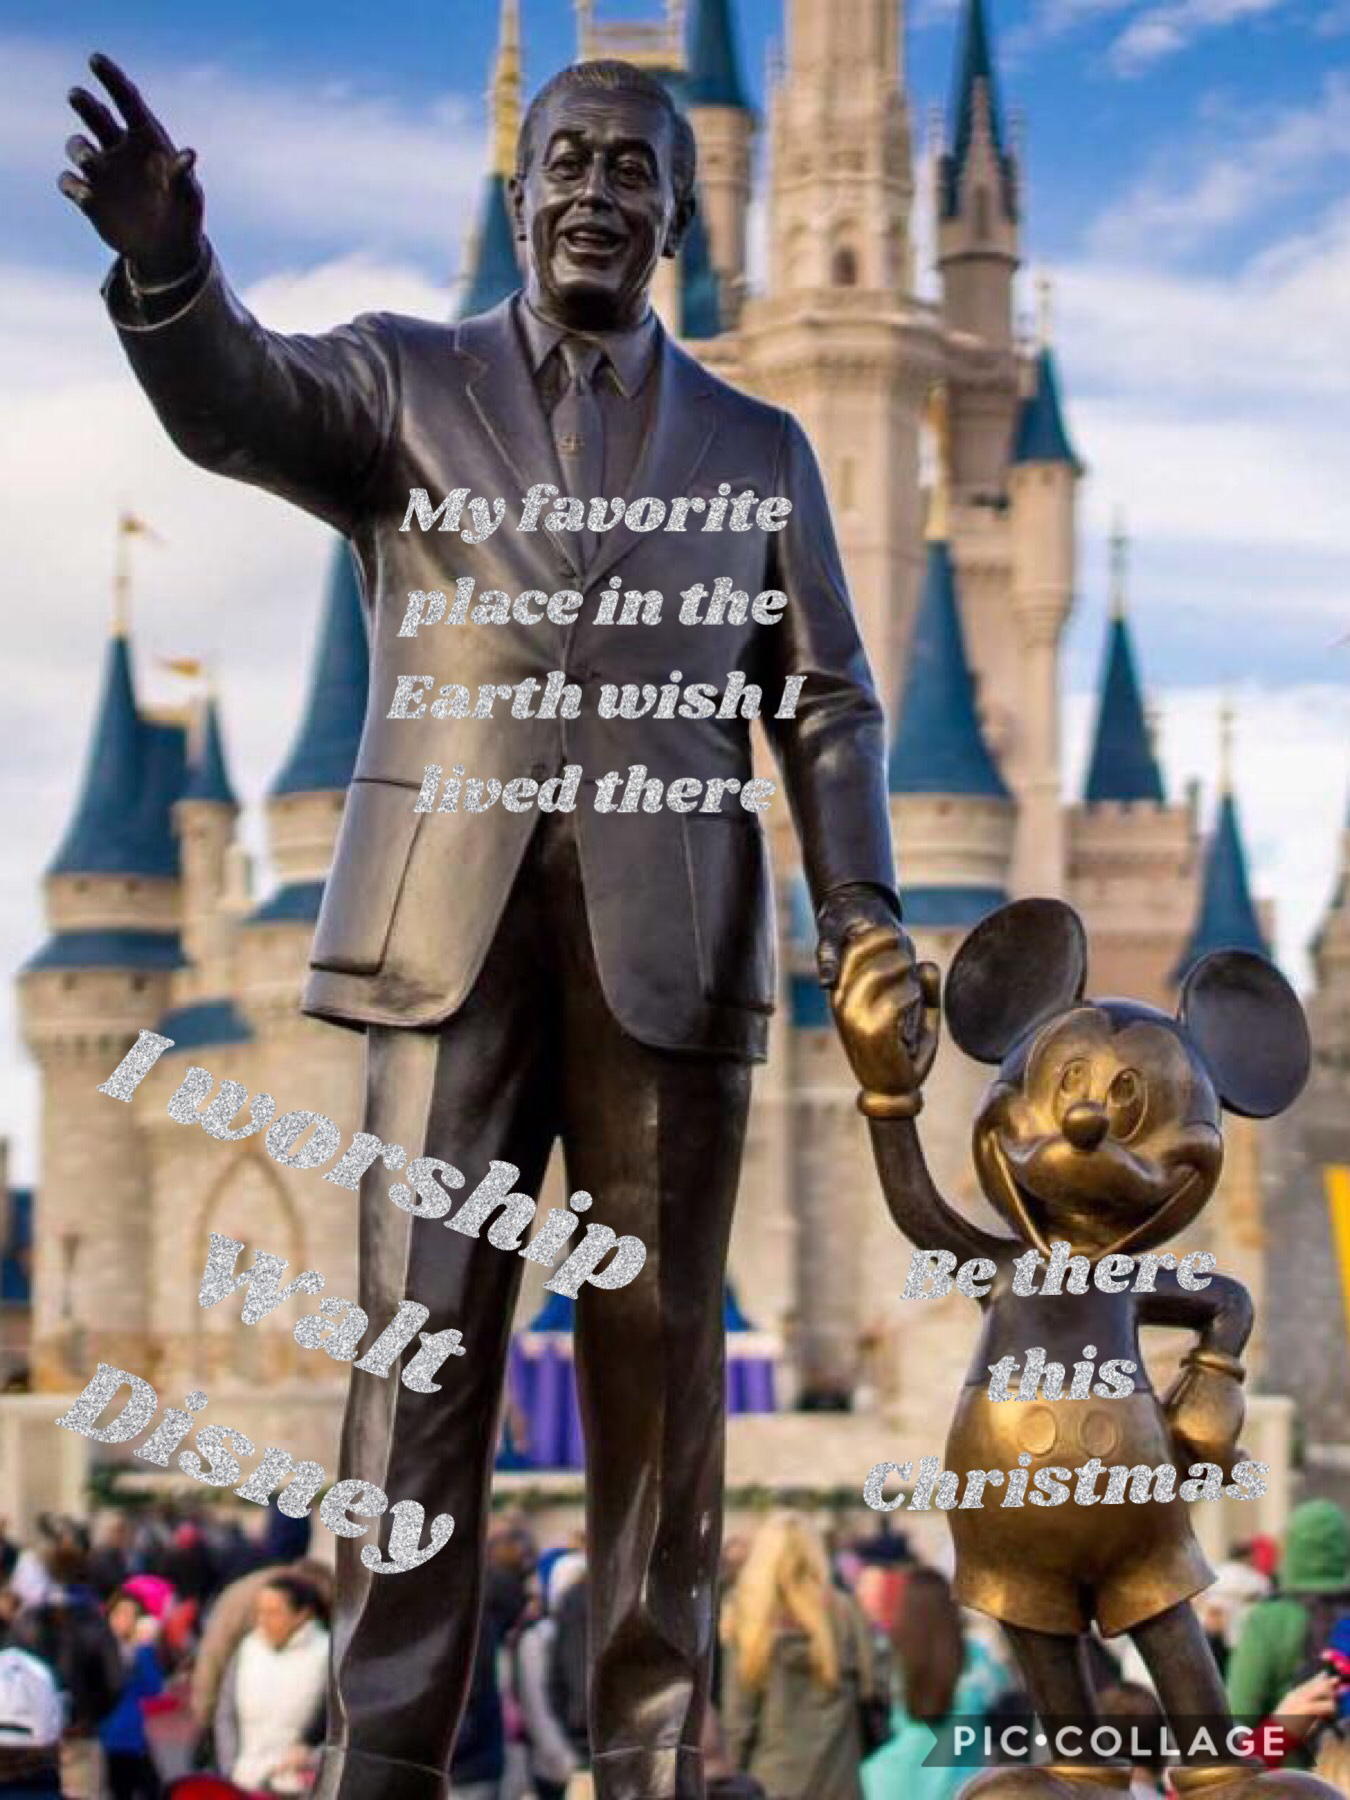 I love Disney World